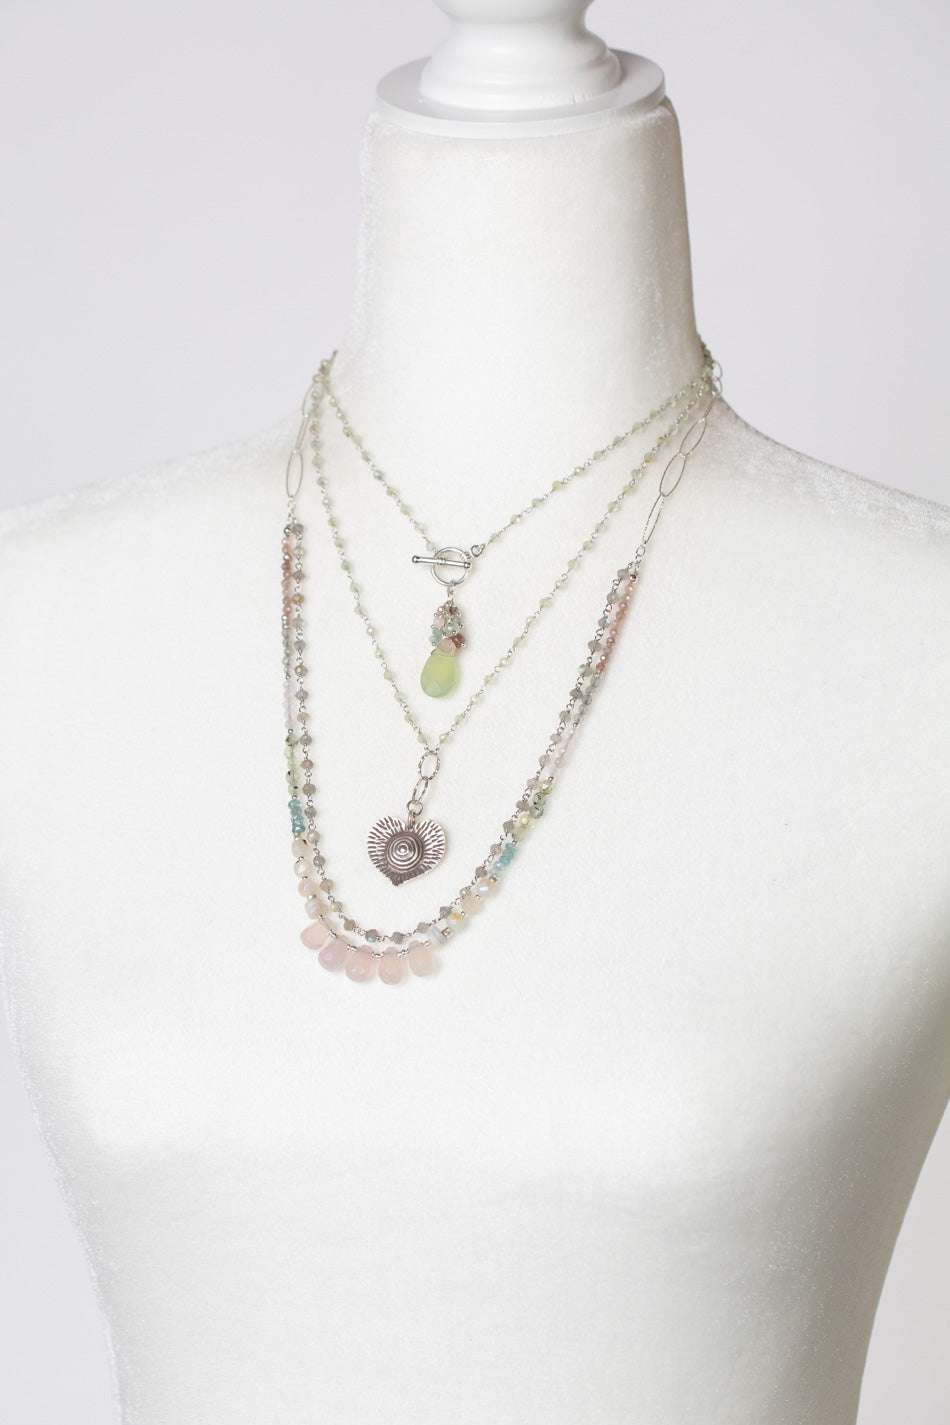 Fae Opal, Zircon, Rose Quartz Necklaces And Earrings Set